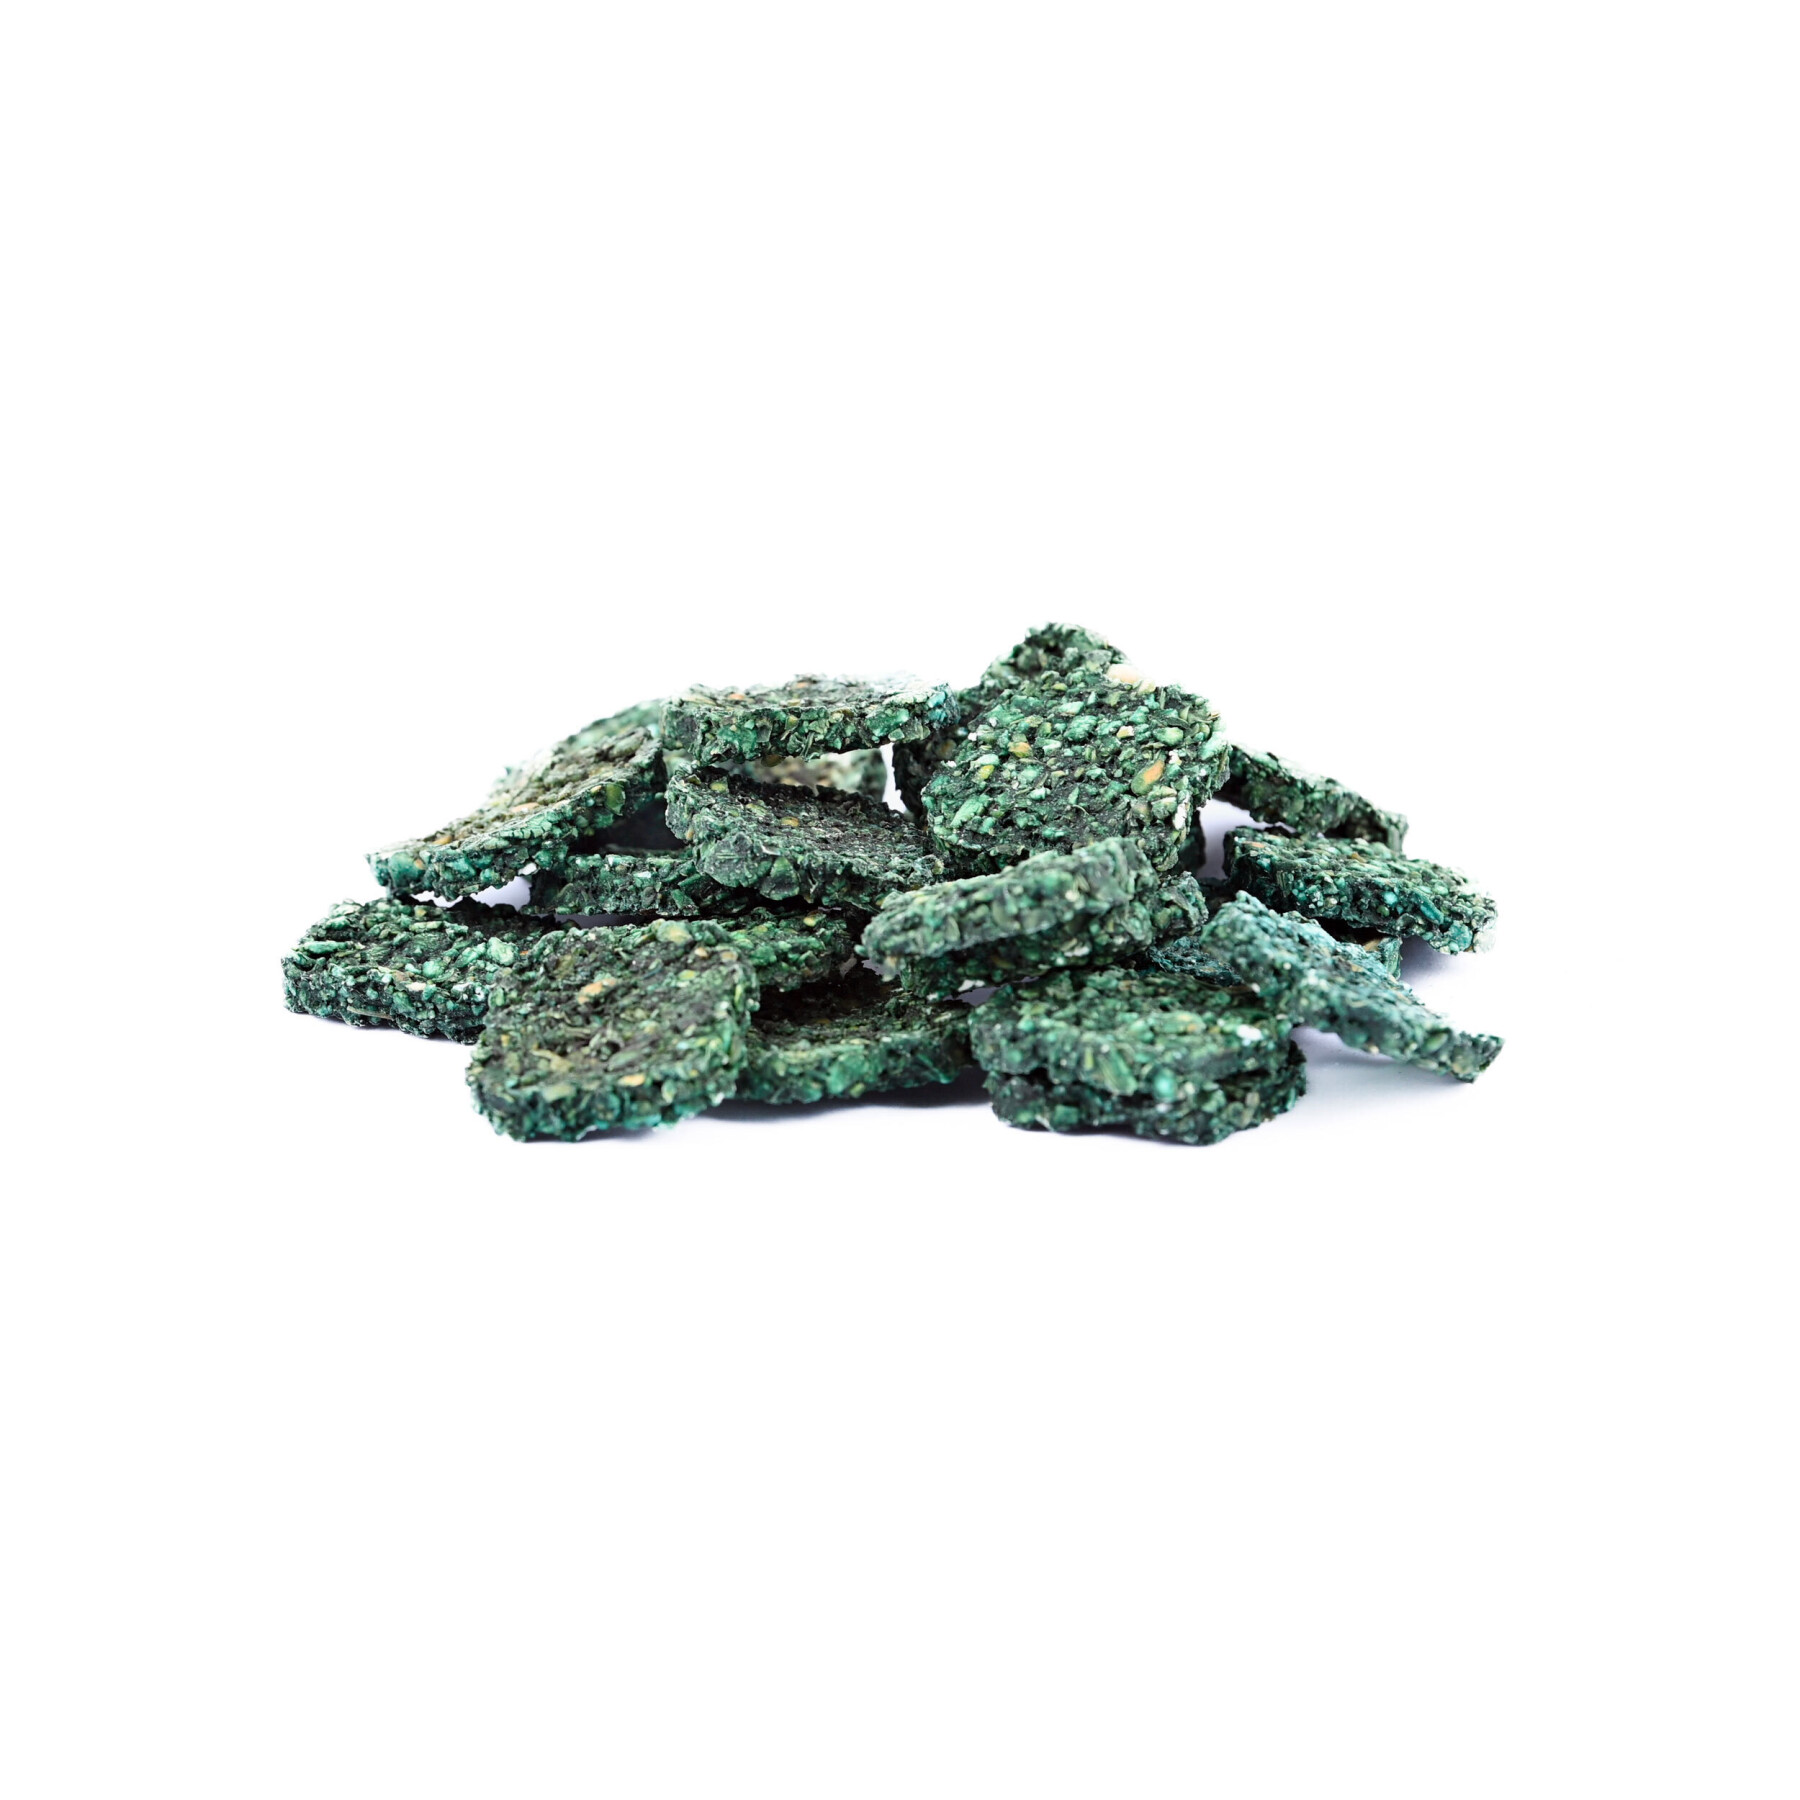 Spirulina paardencrackers voor vorm en vitaliteit Natural Innov Natural'Crackers Top - 300 g